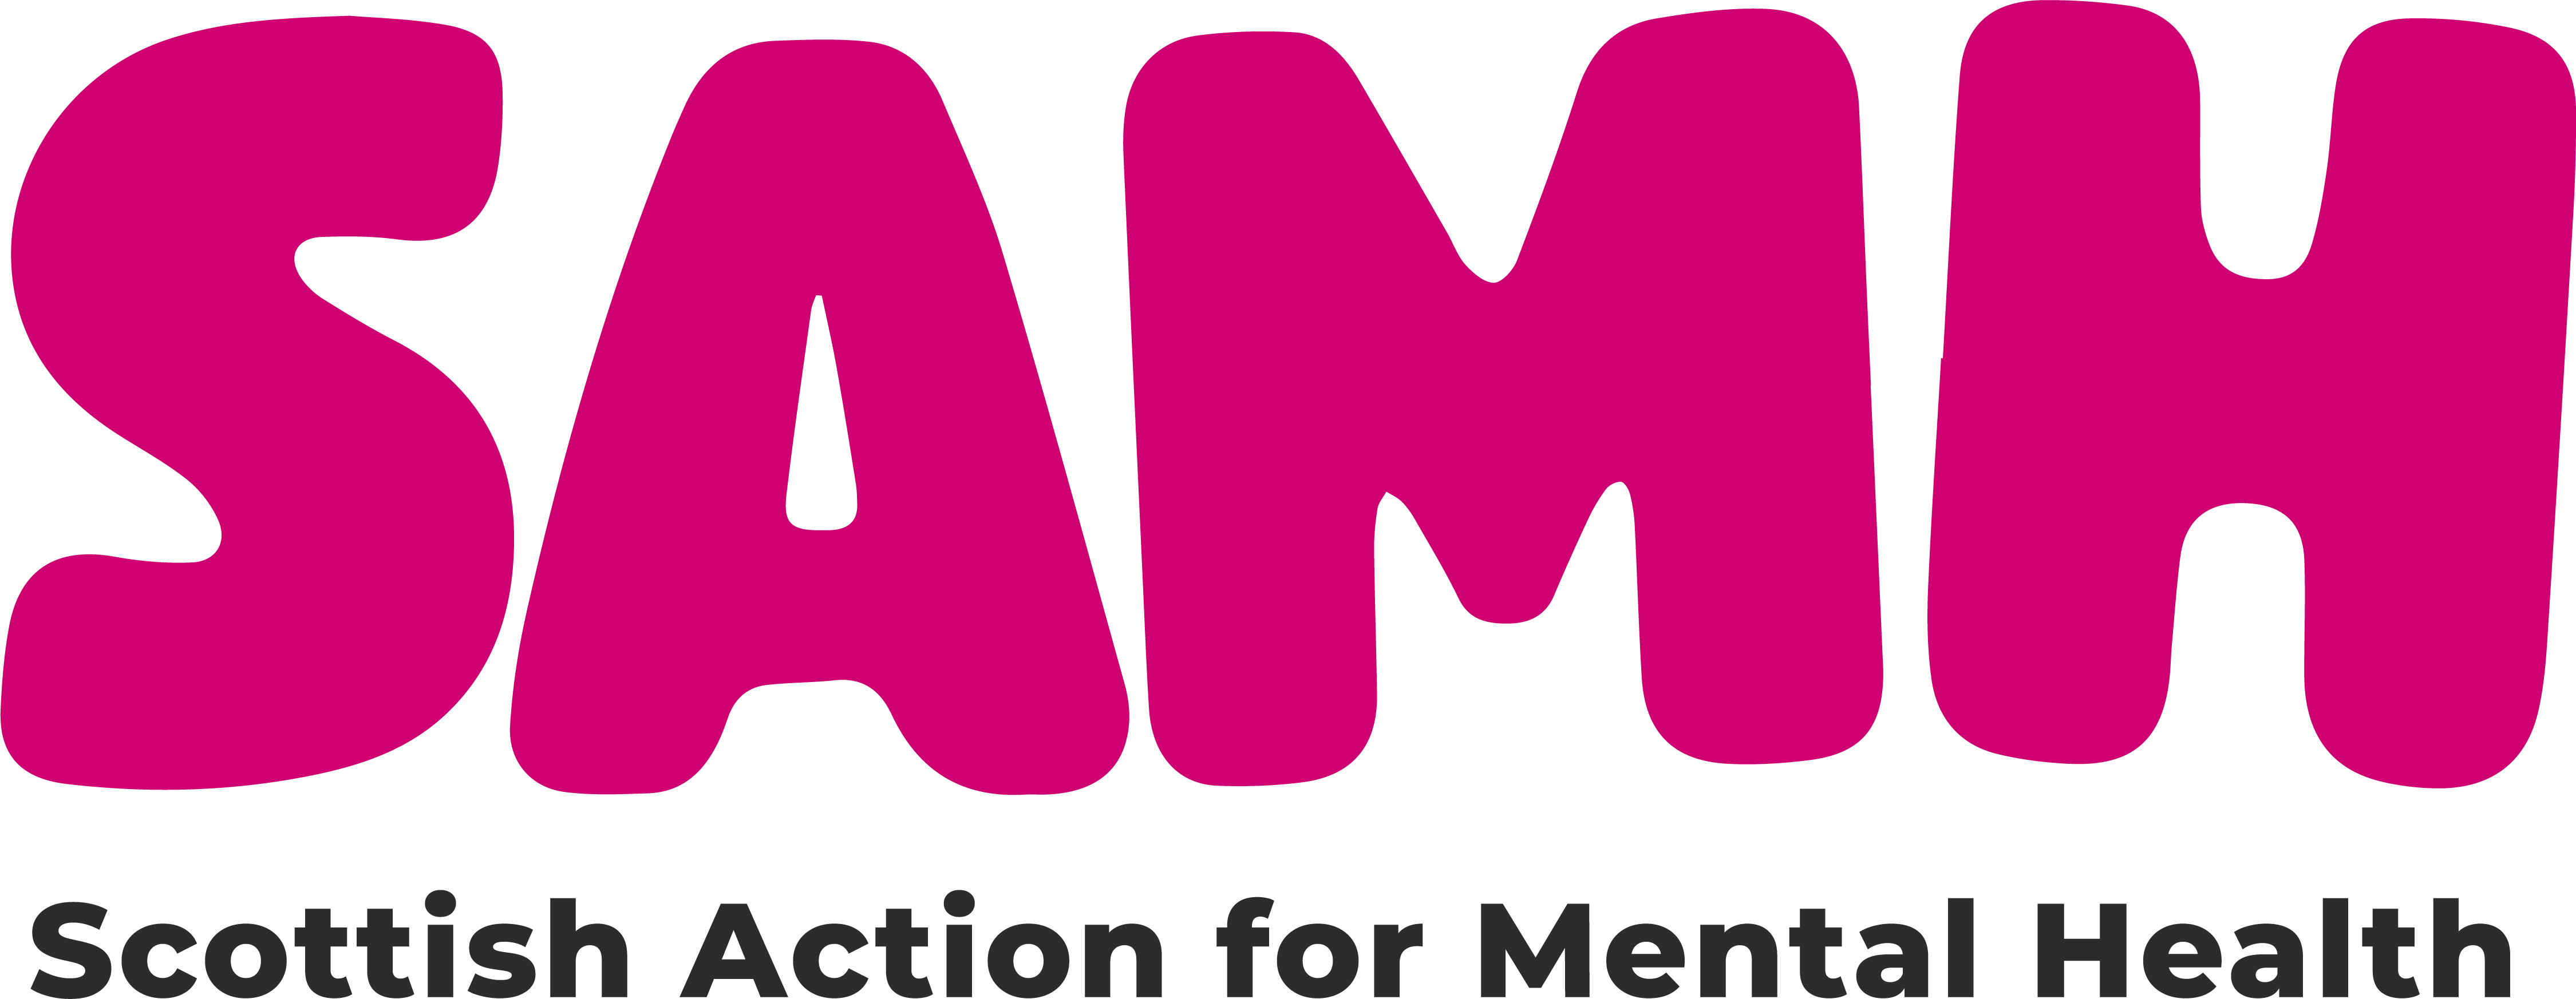 SAMH Scottish Action for Mental Health